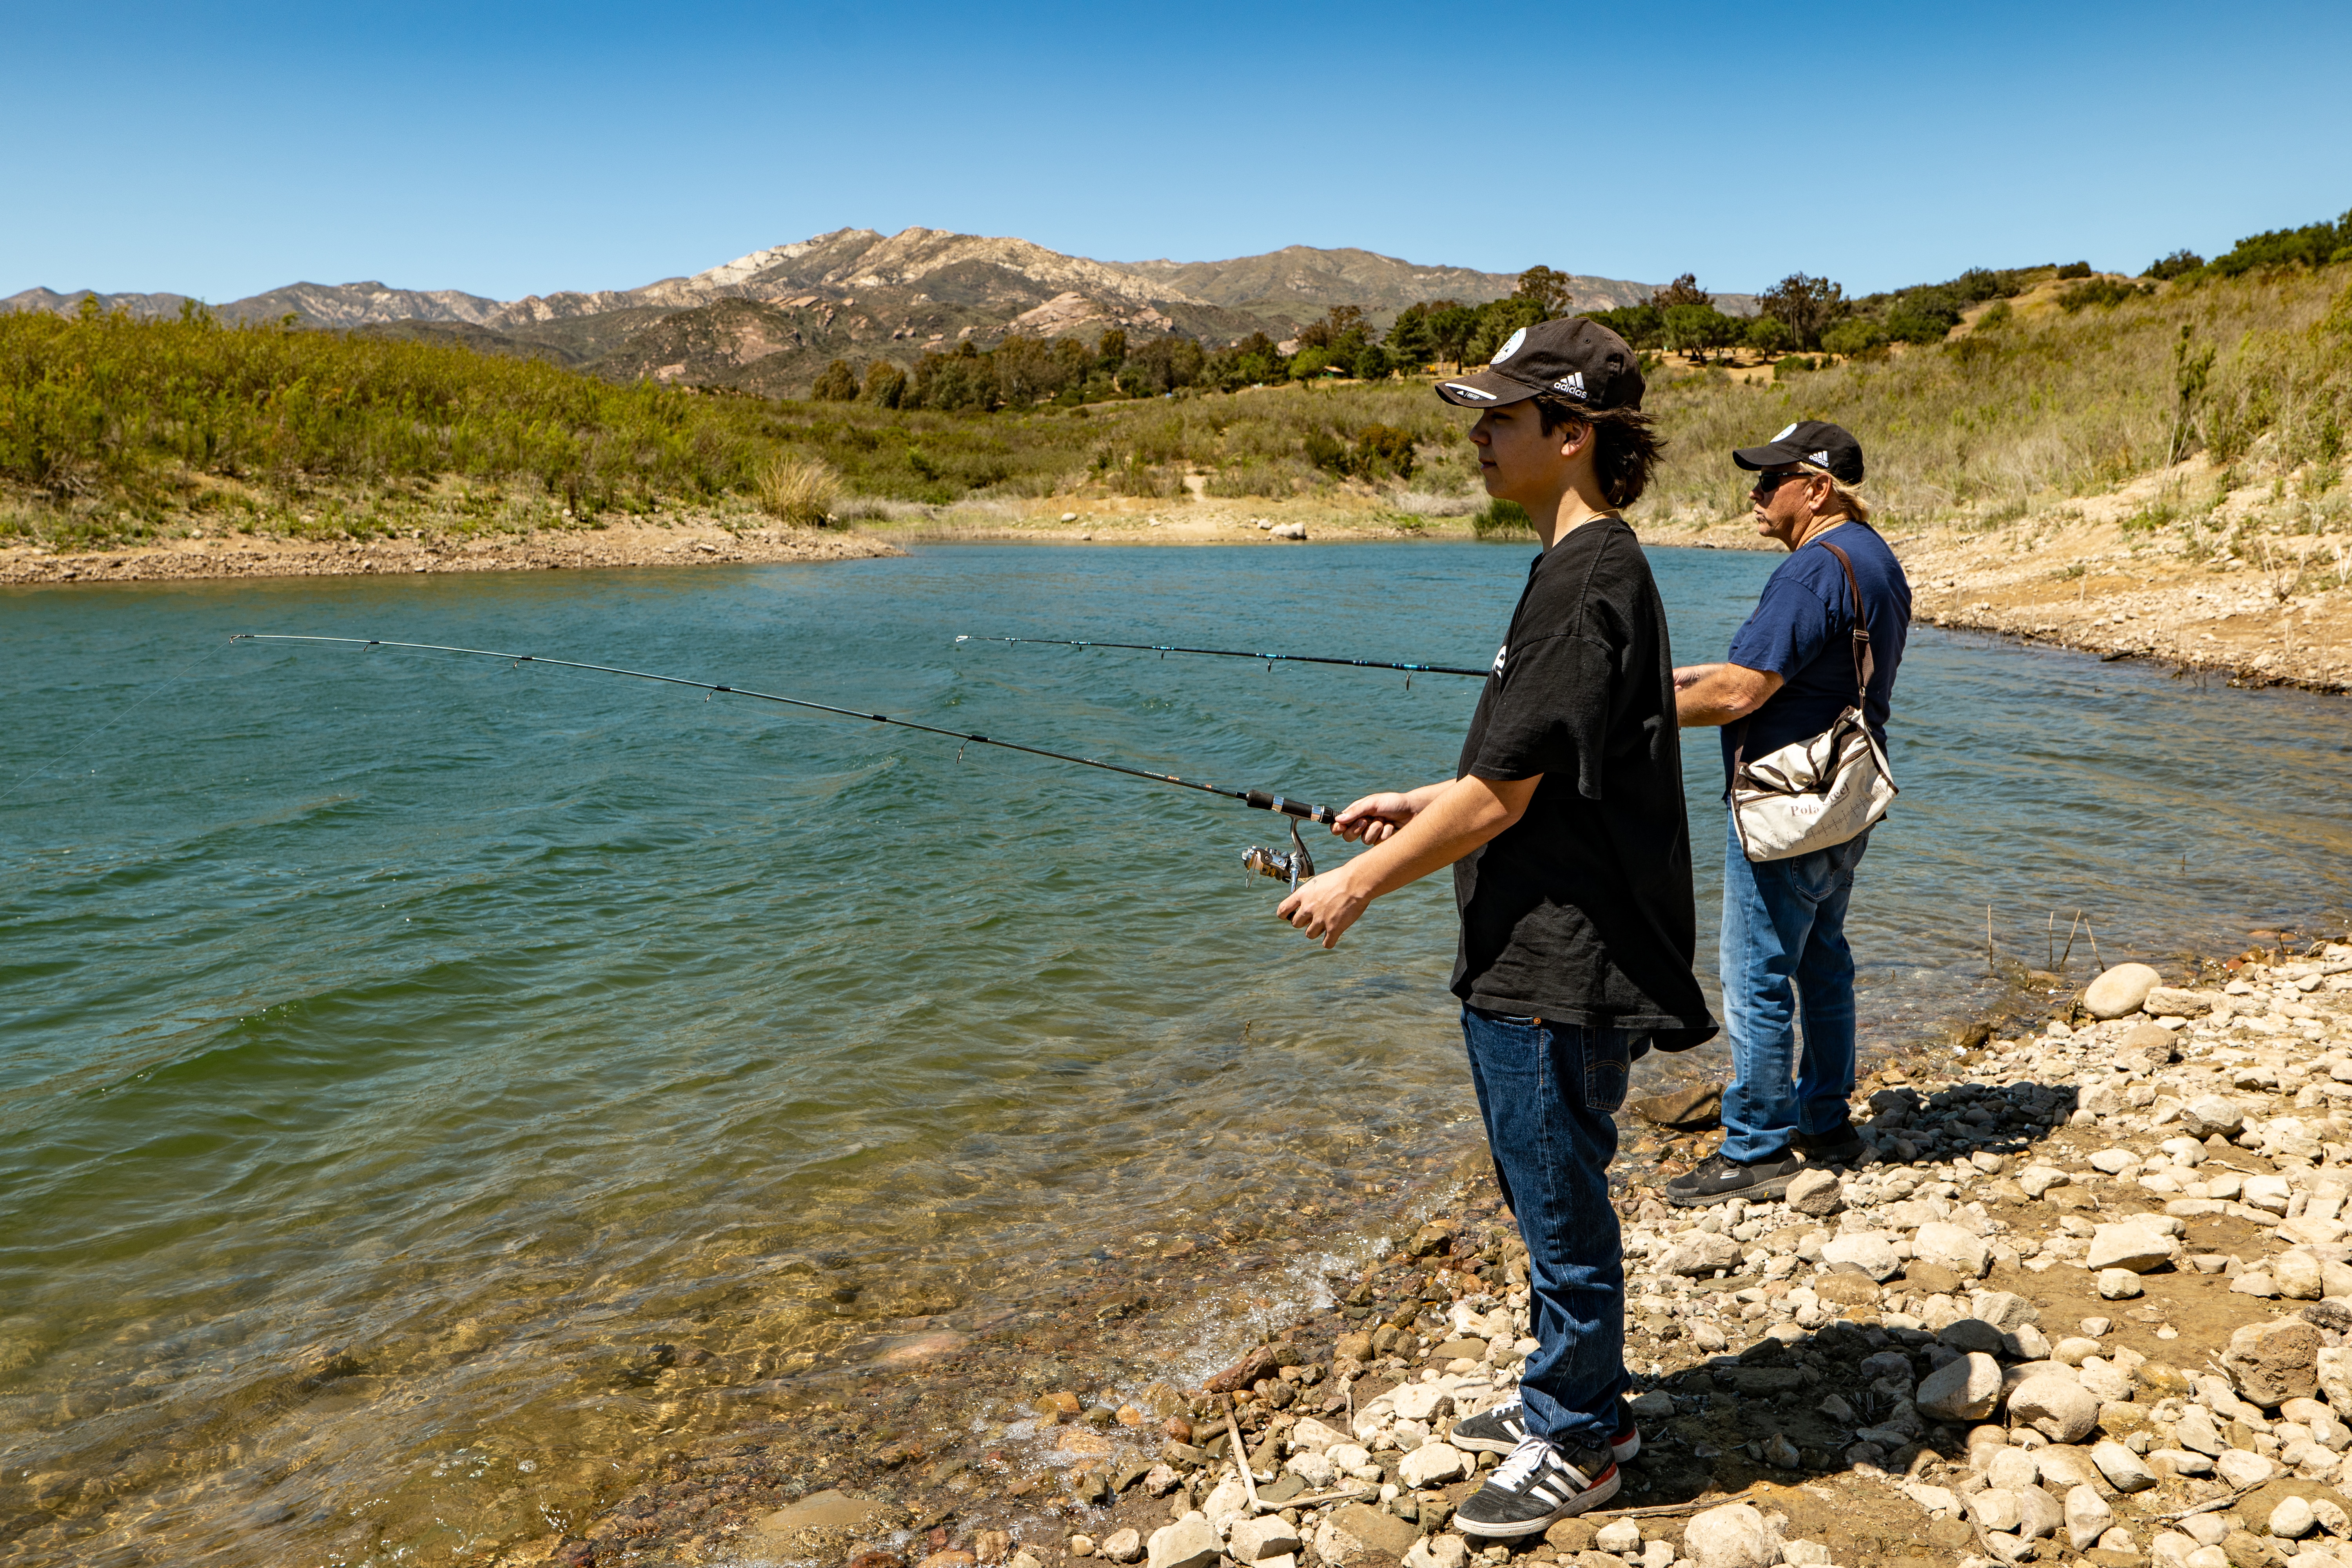 Lake Casitas Recreation Area, California - Fishing